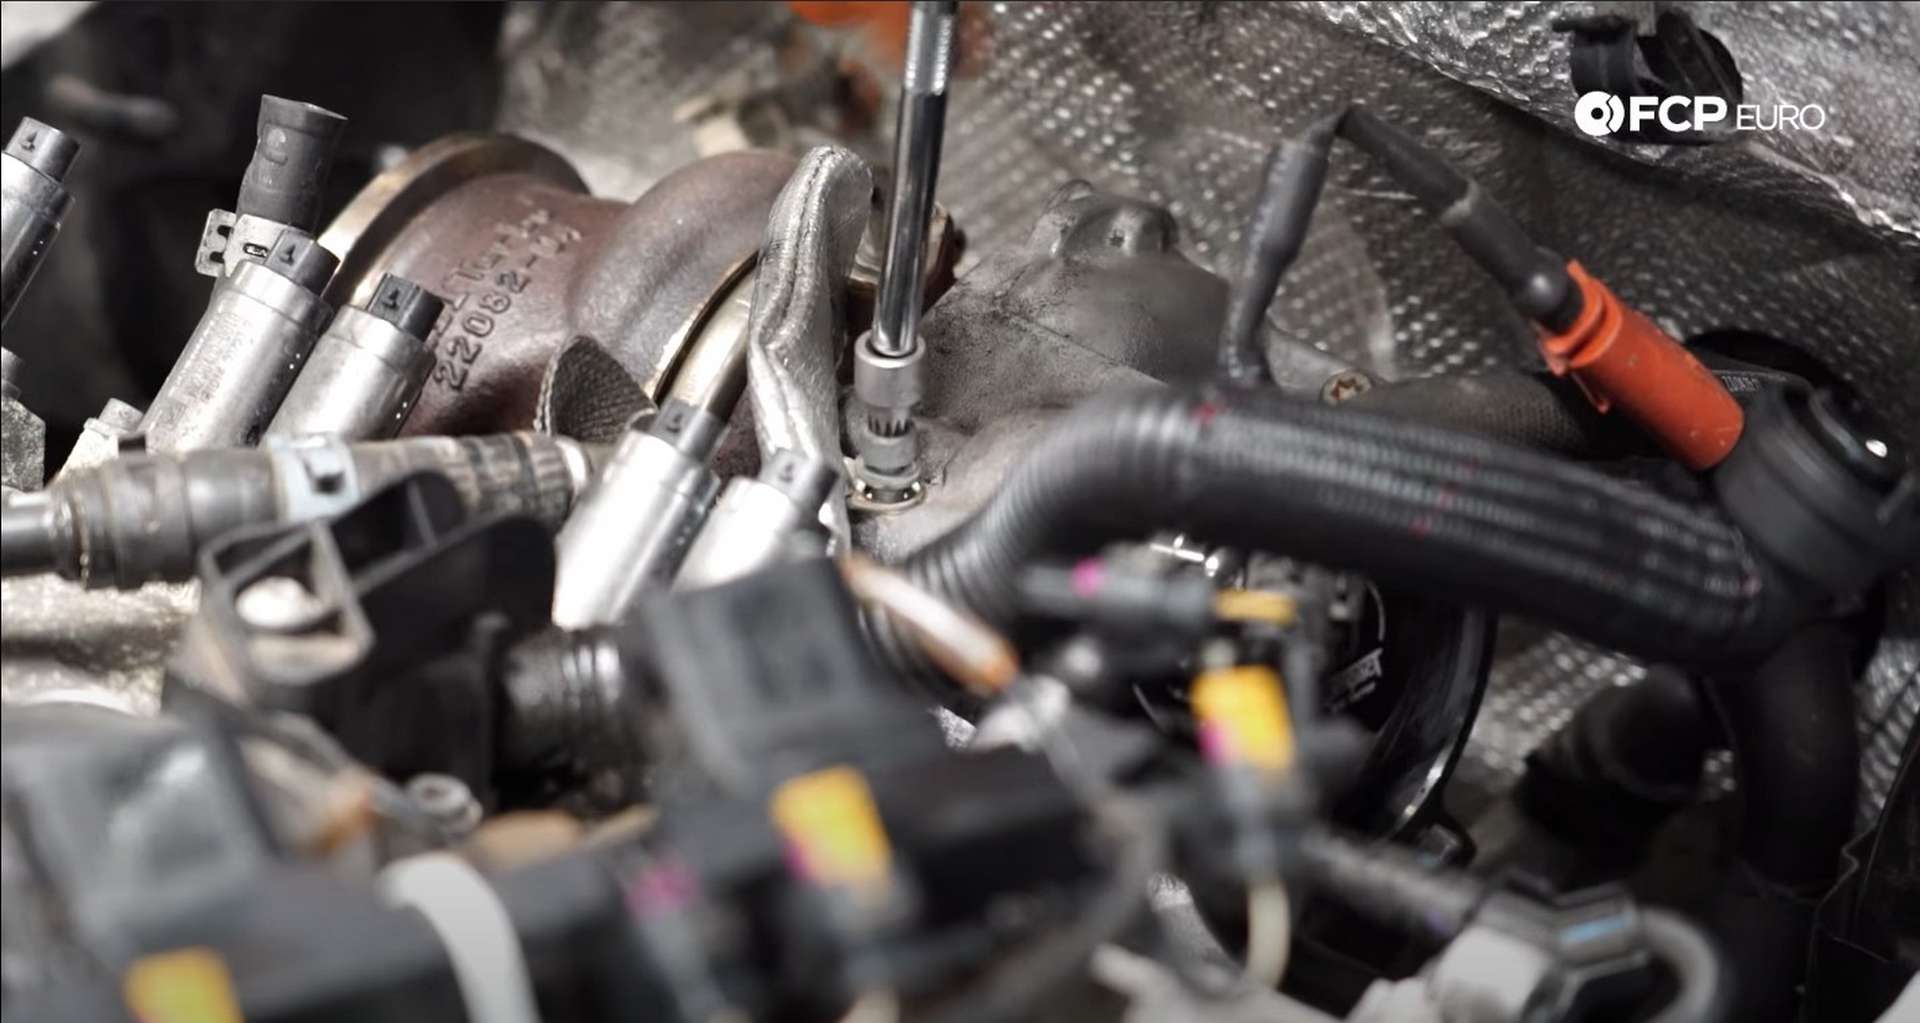 DIY MK7 VW GTI Turbocharger Upgrade removing oil feed line bracket bolt